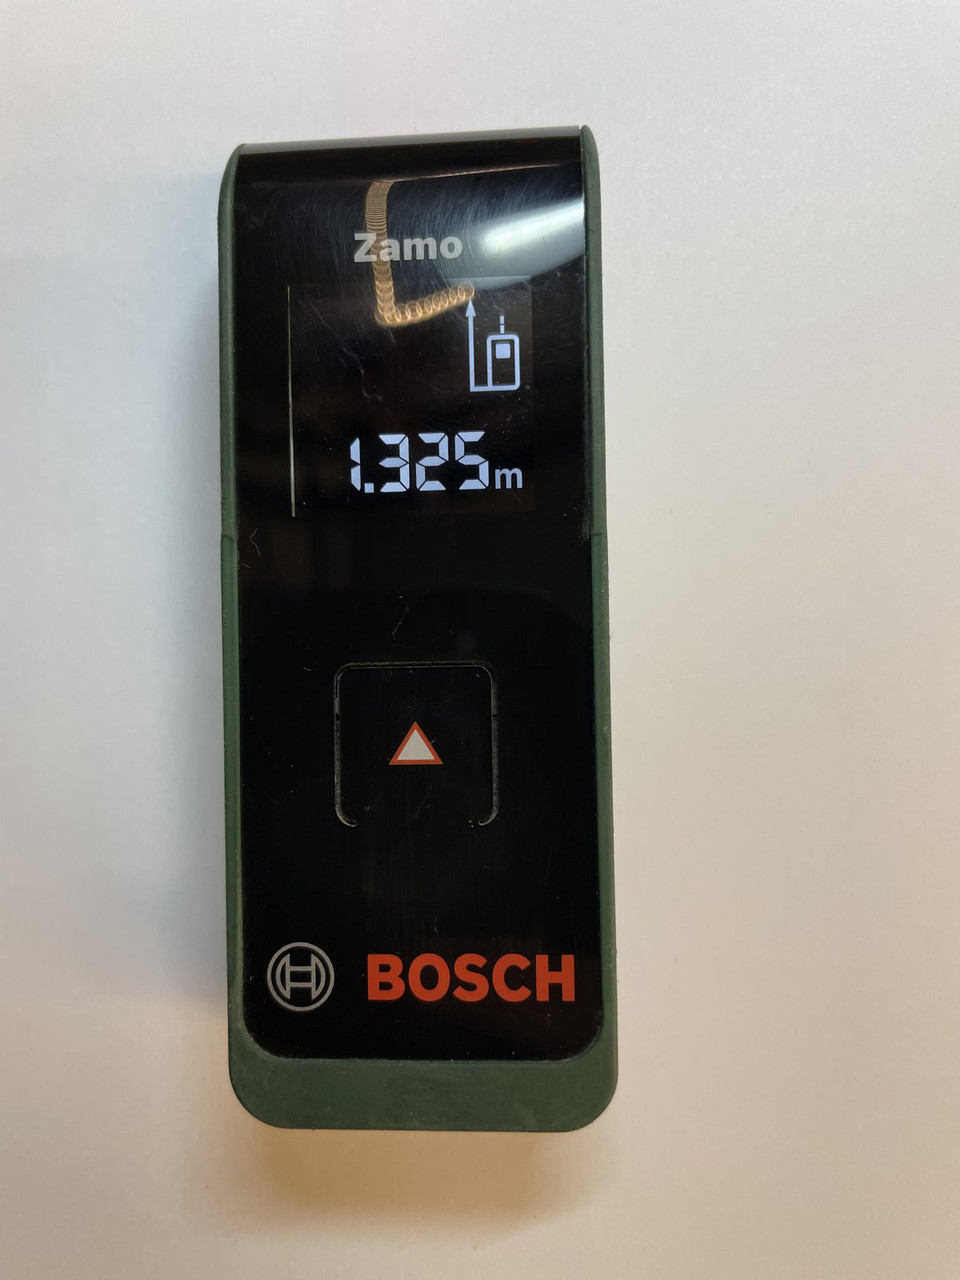 Ex Display Bosch Zamo Digital Laser Measure Distance Measurer